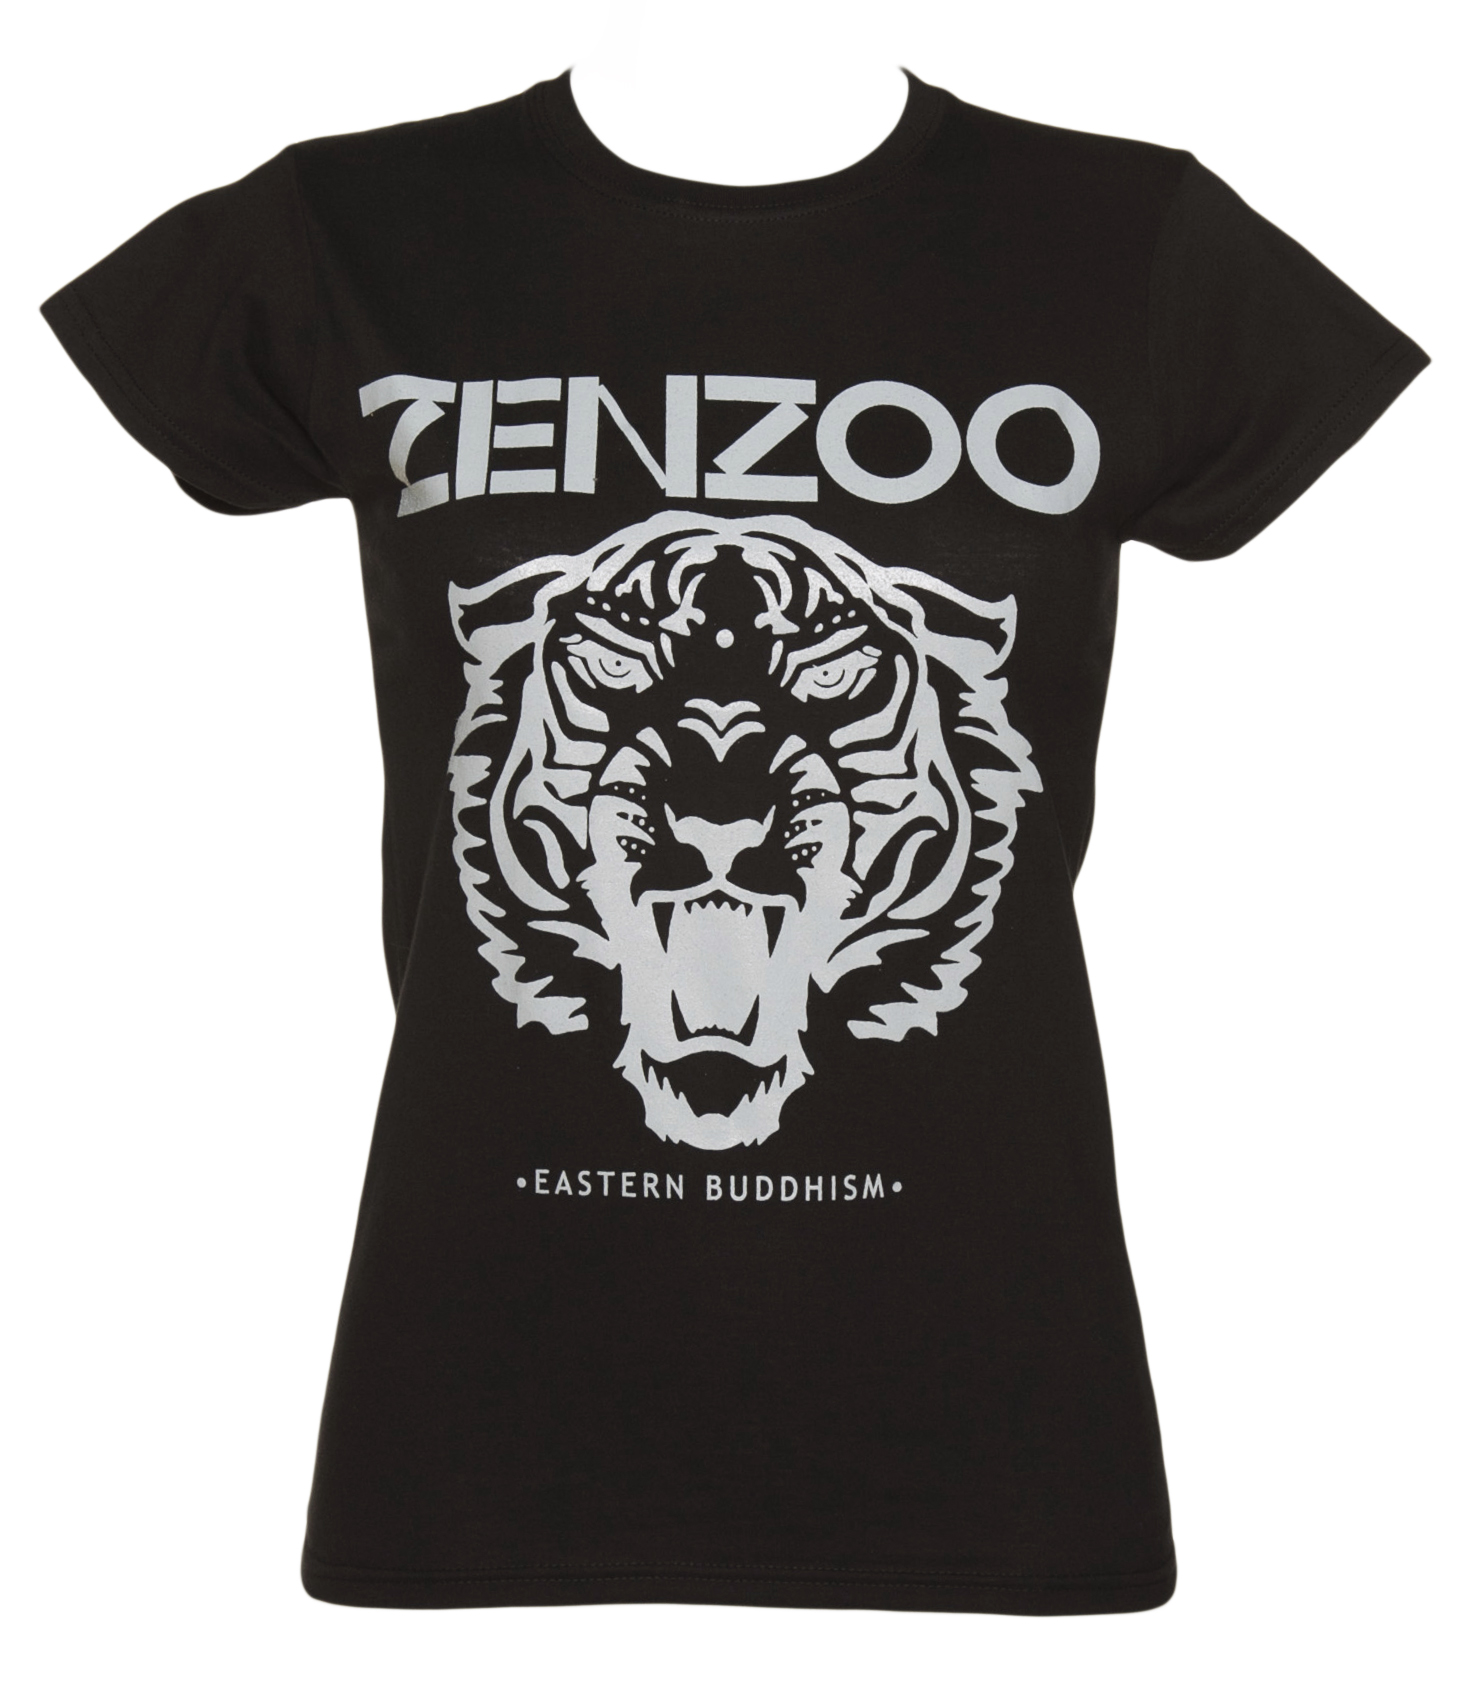 Ladies Black Zenzoo Parody T-Shirt from Brand